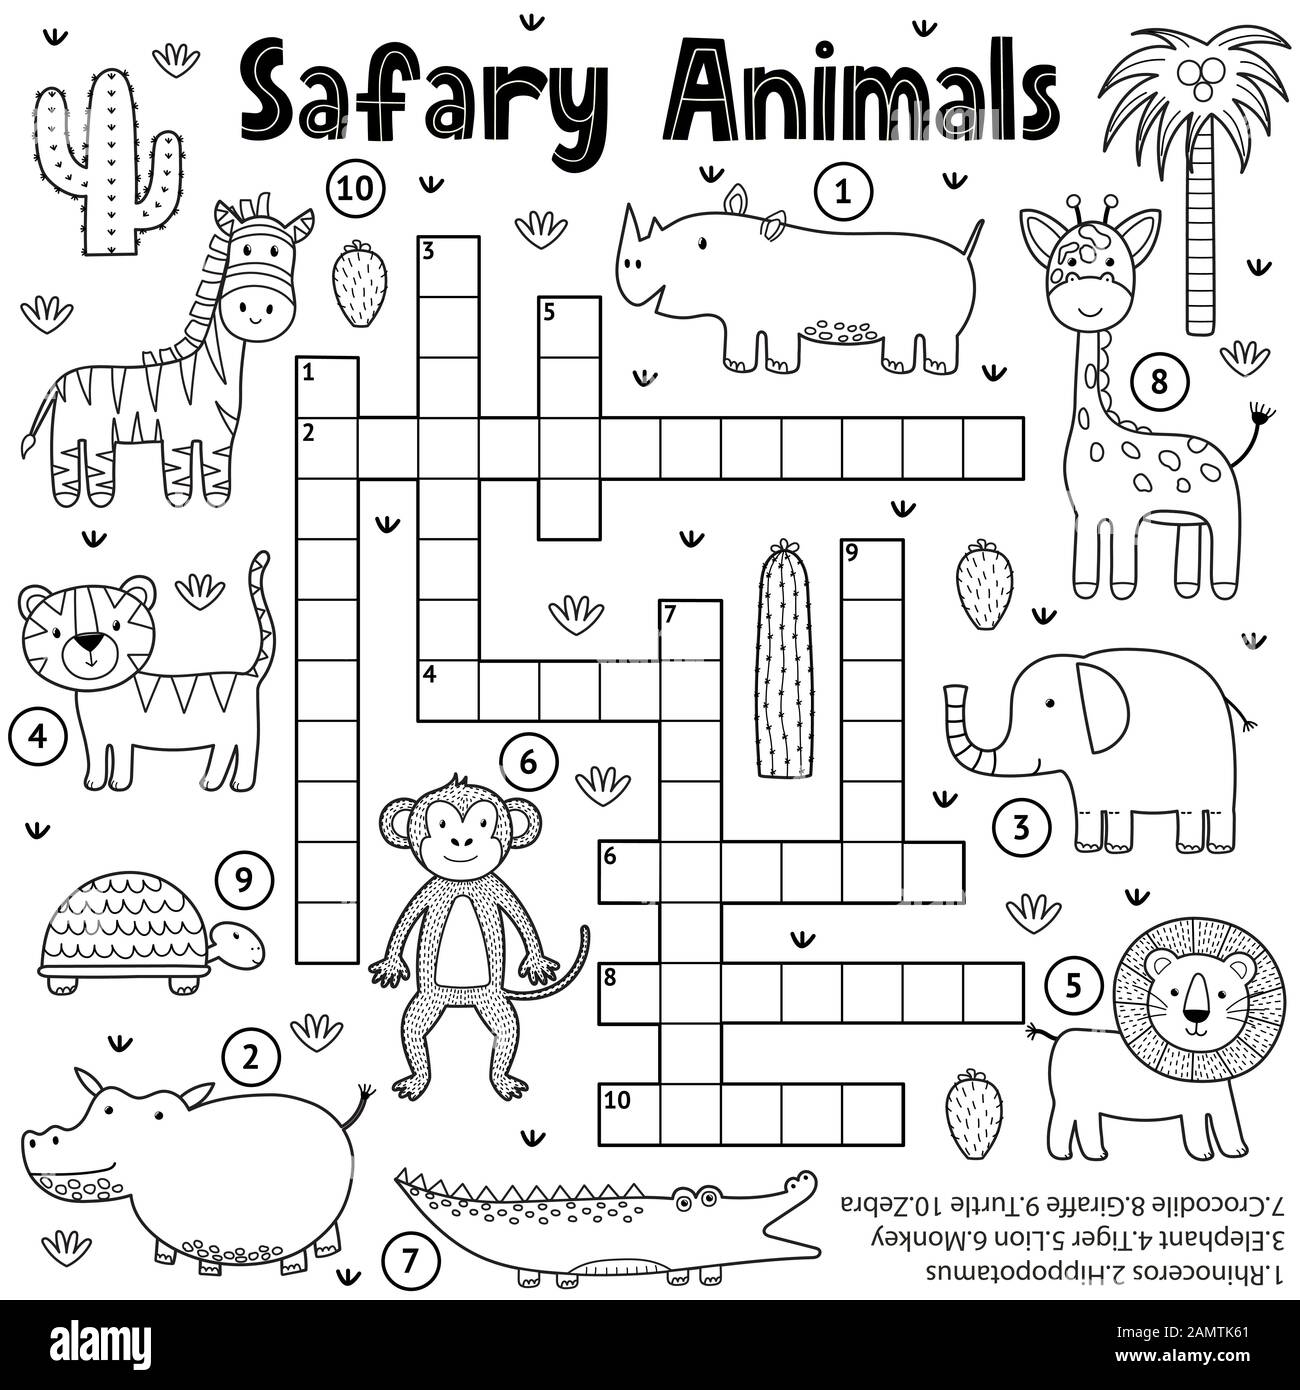 https://c8.alamy.com/comp/2AMTK61/black-and-white-crossword-game-for-kids-with-safari-animals-2AMTK61.jpg